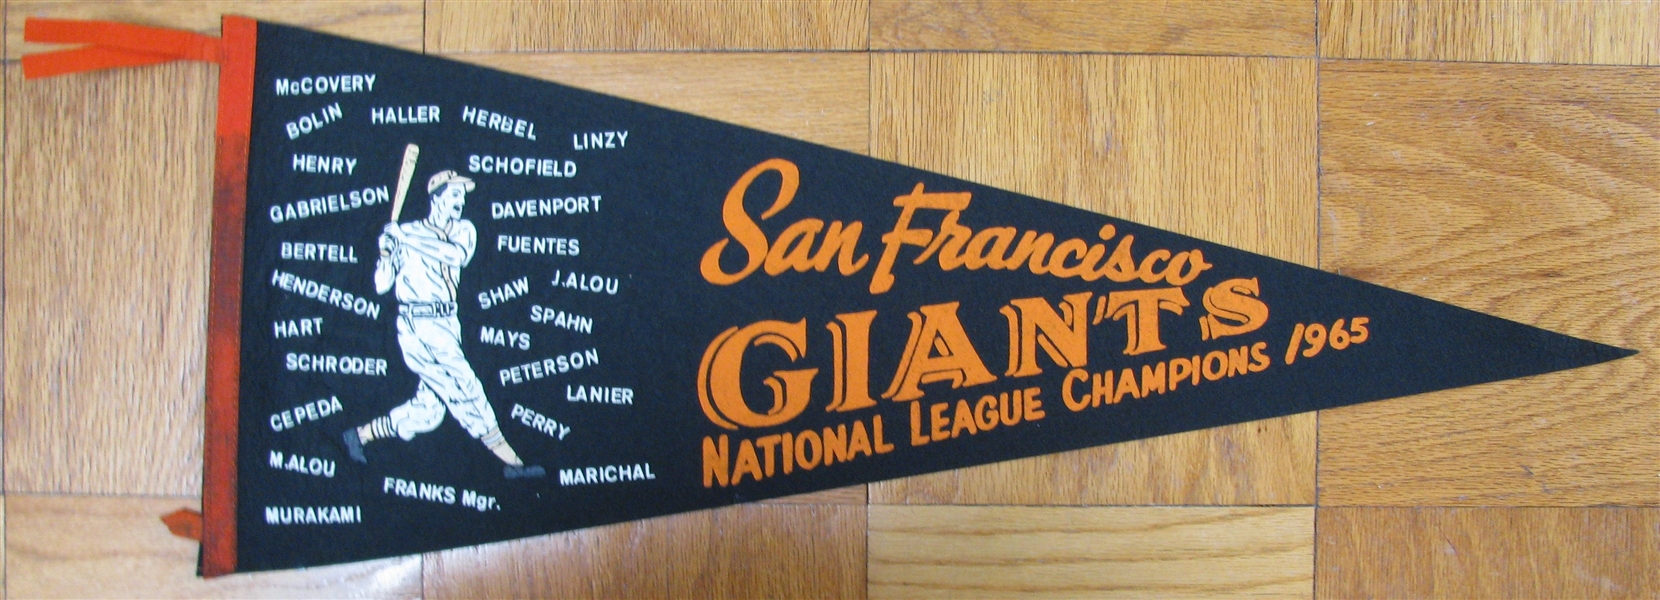 1965 SAN FRANCISCO GIANTS NL CHAMPIONS PHANTOM PENNANT